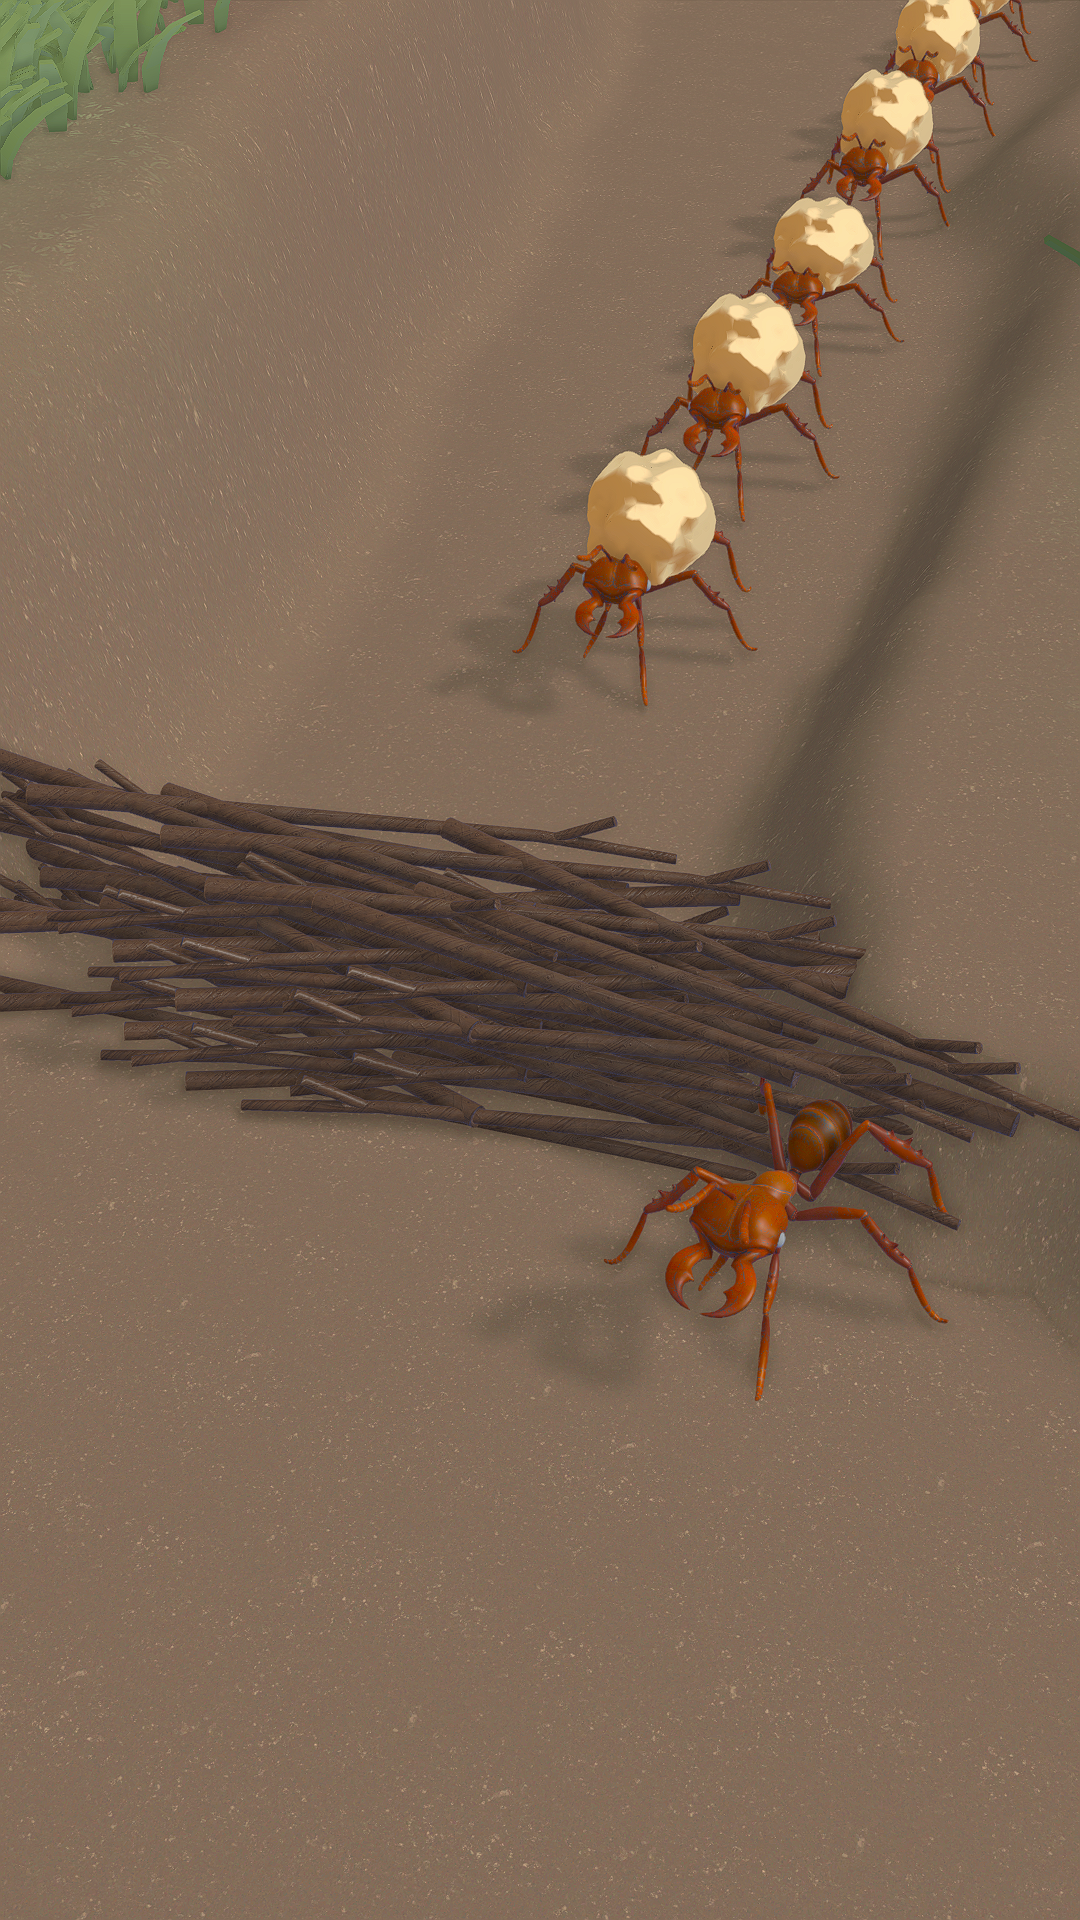 Screenshot of Ant Colony Adventure